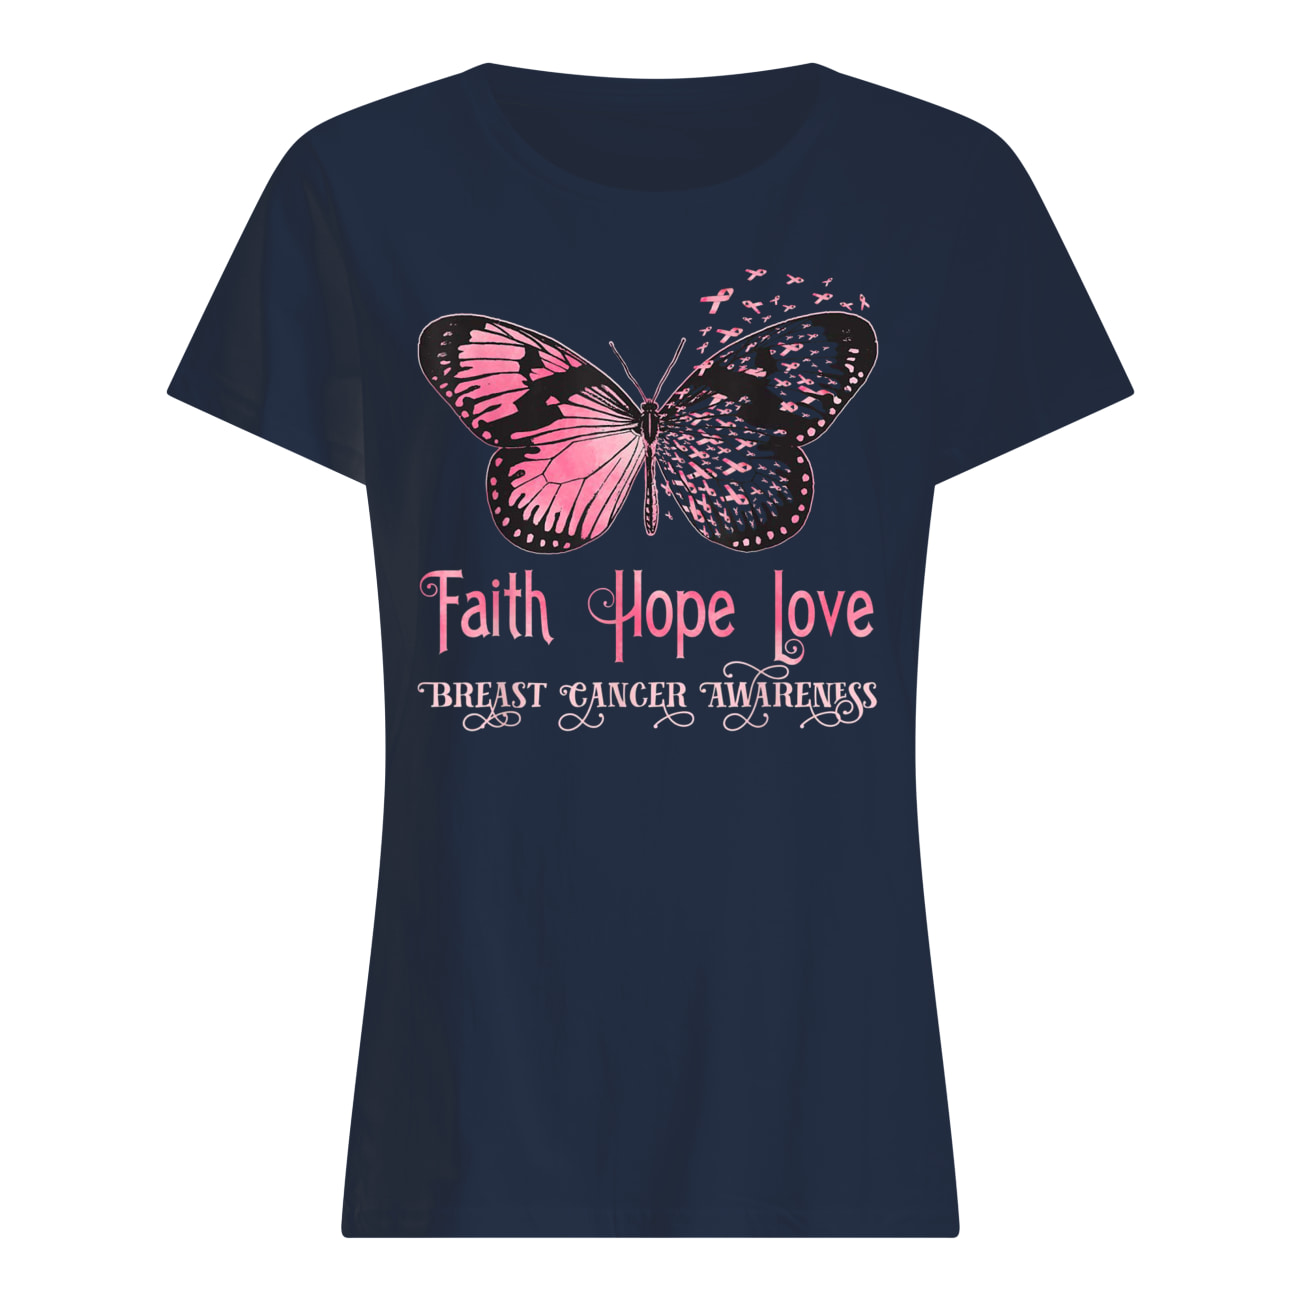 Faith hope love pink butterfly breast cancer awareness womens shirt